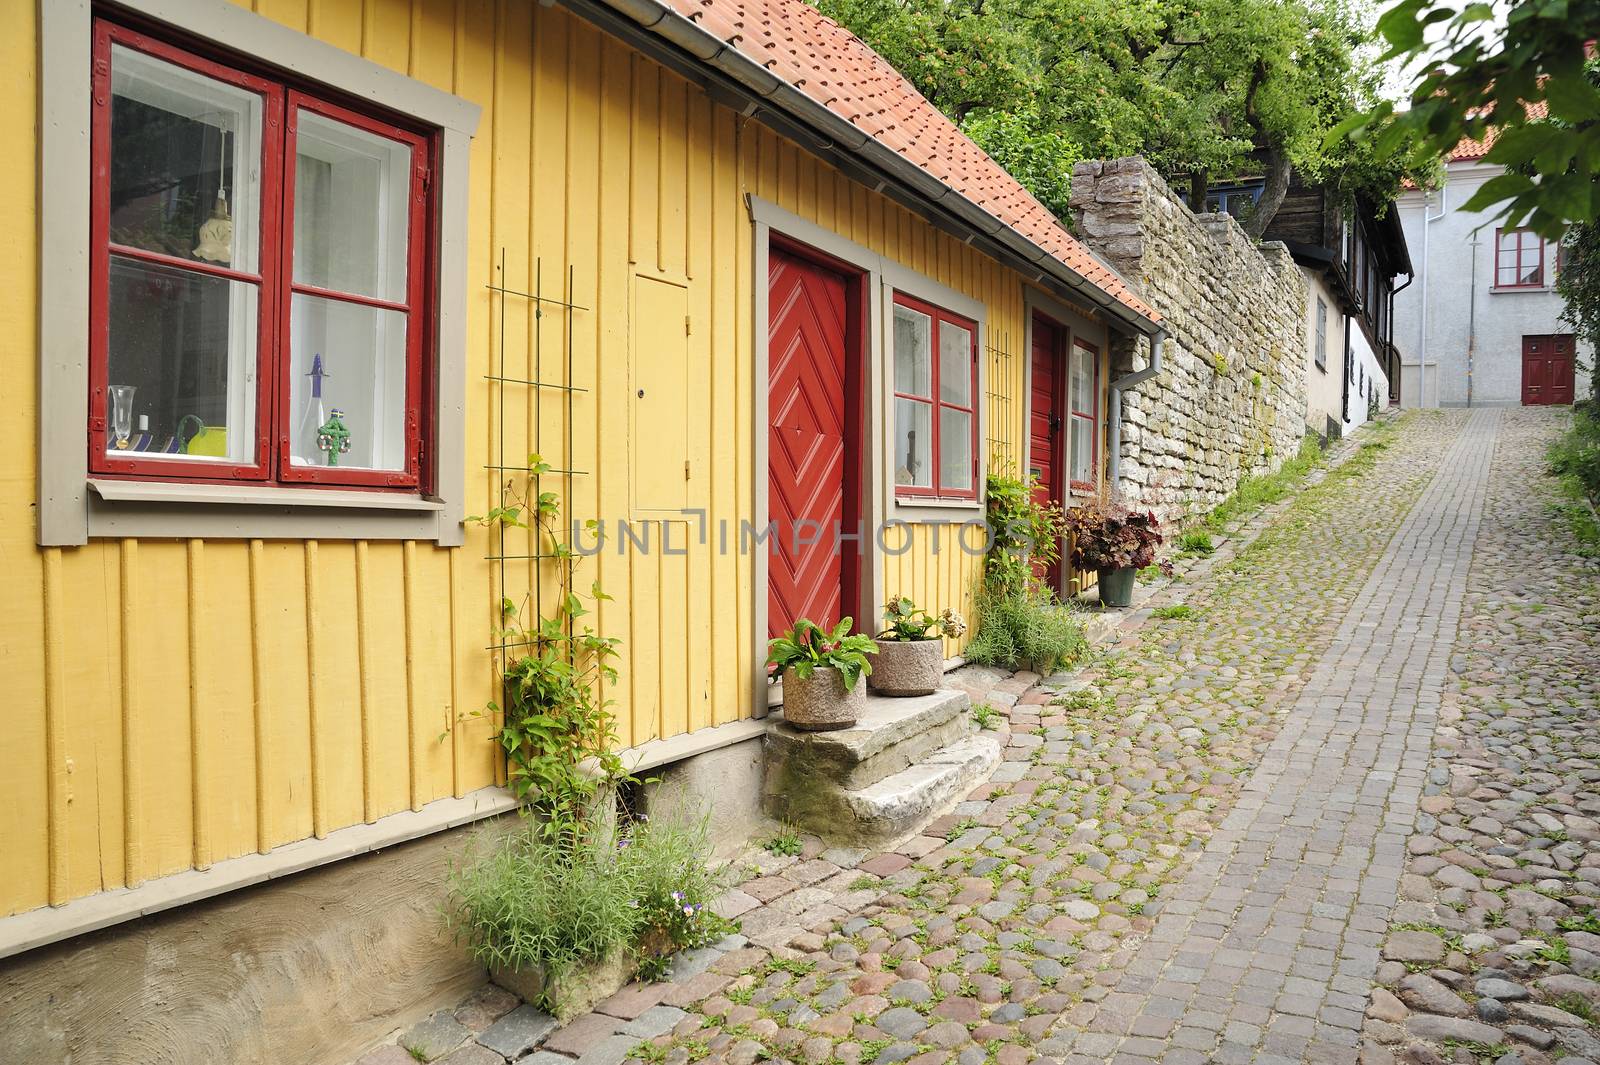 Swedish housing, Visby in Gotland.